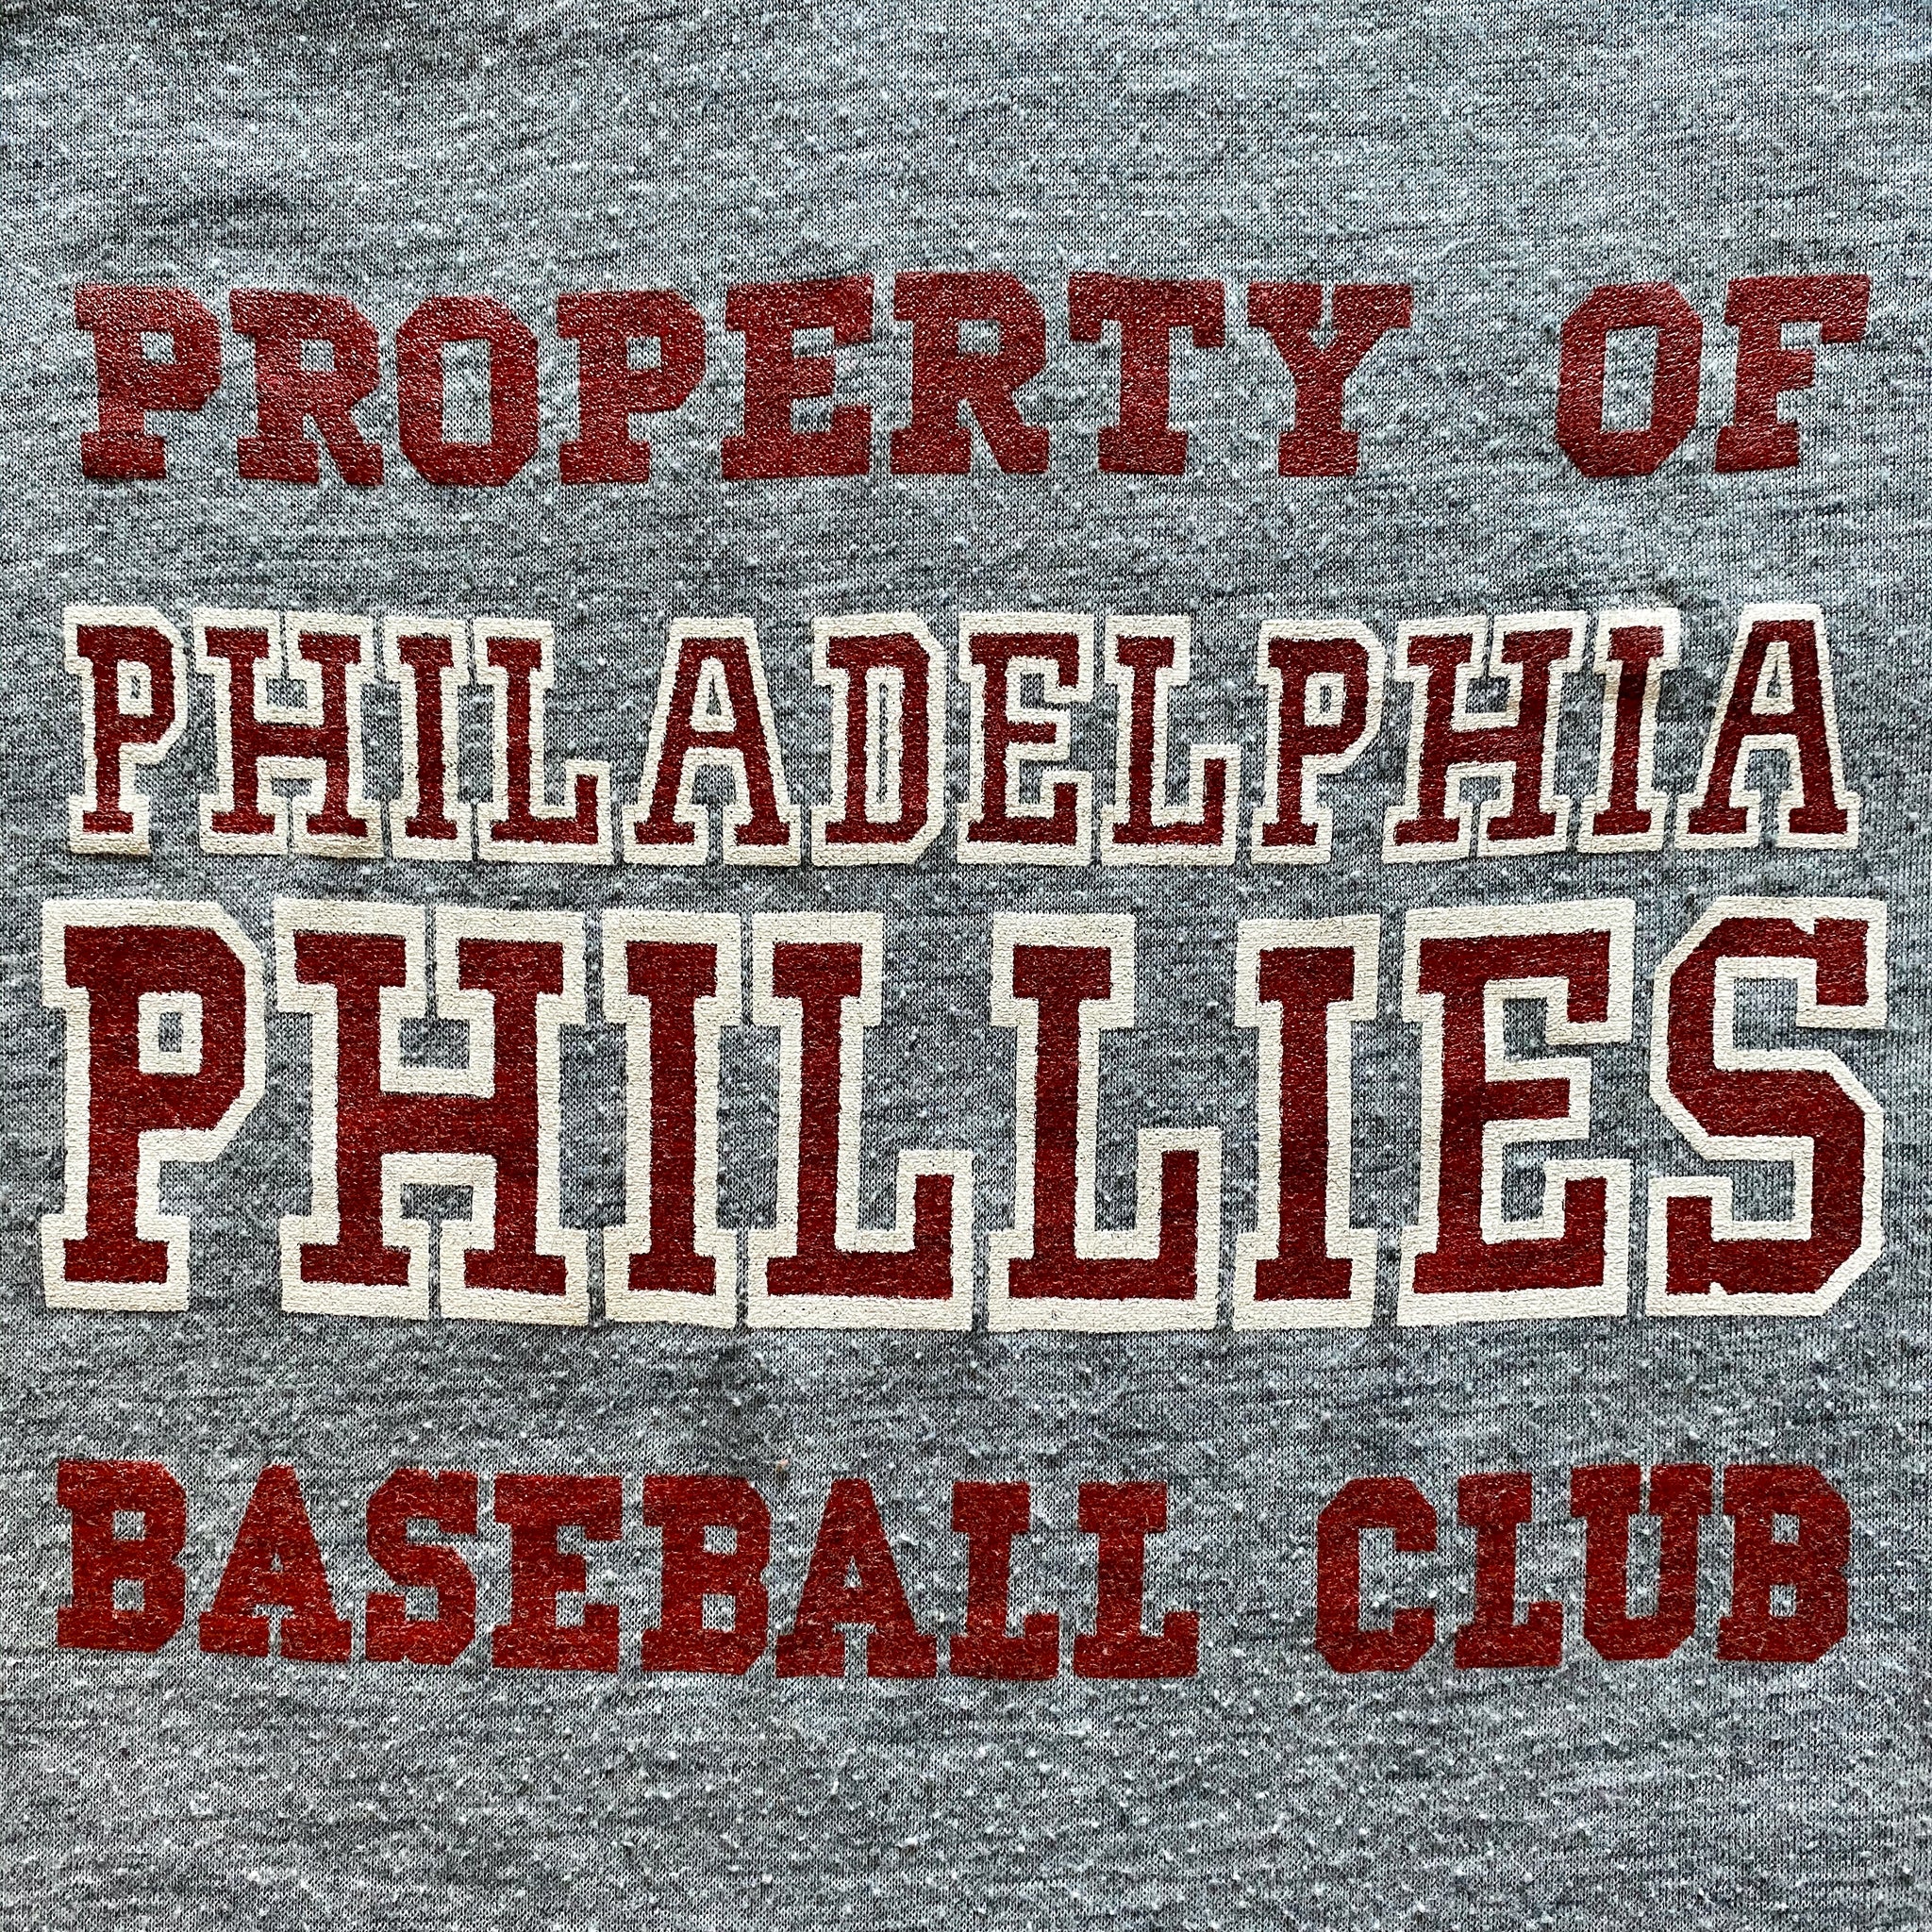 1970s Vintage Philadelphia Phillies T-Shirt